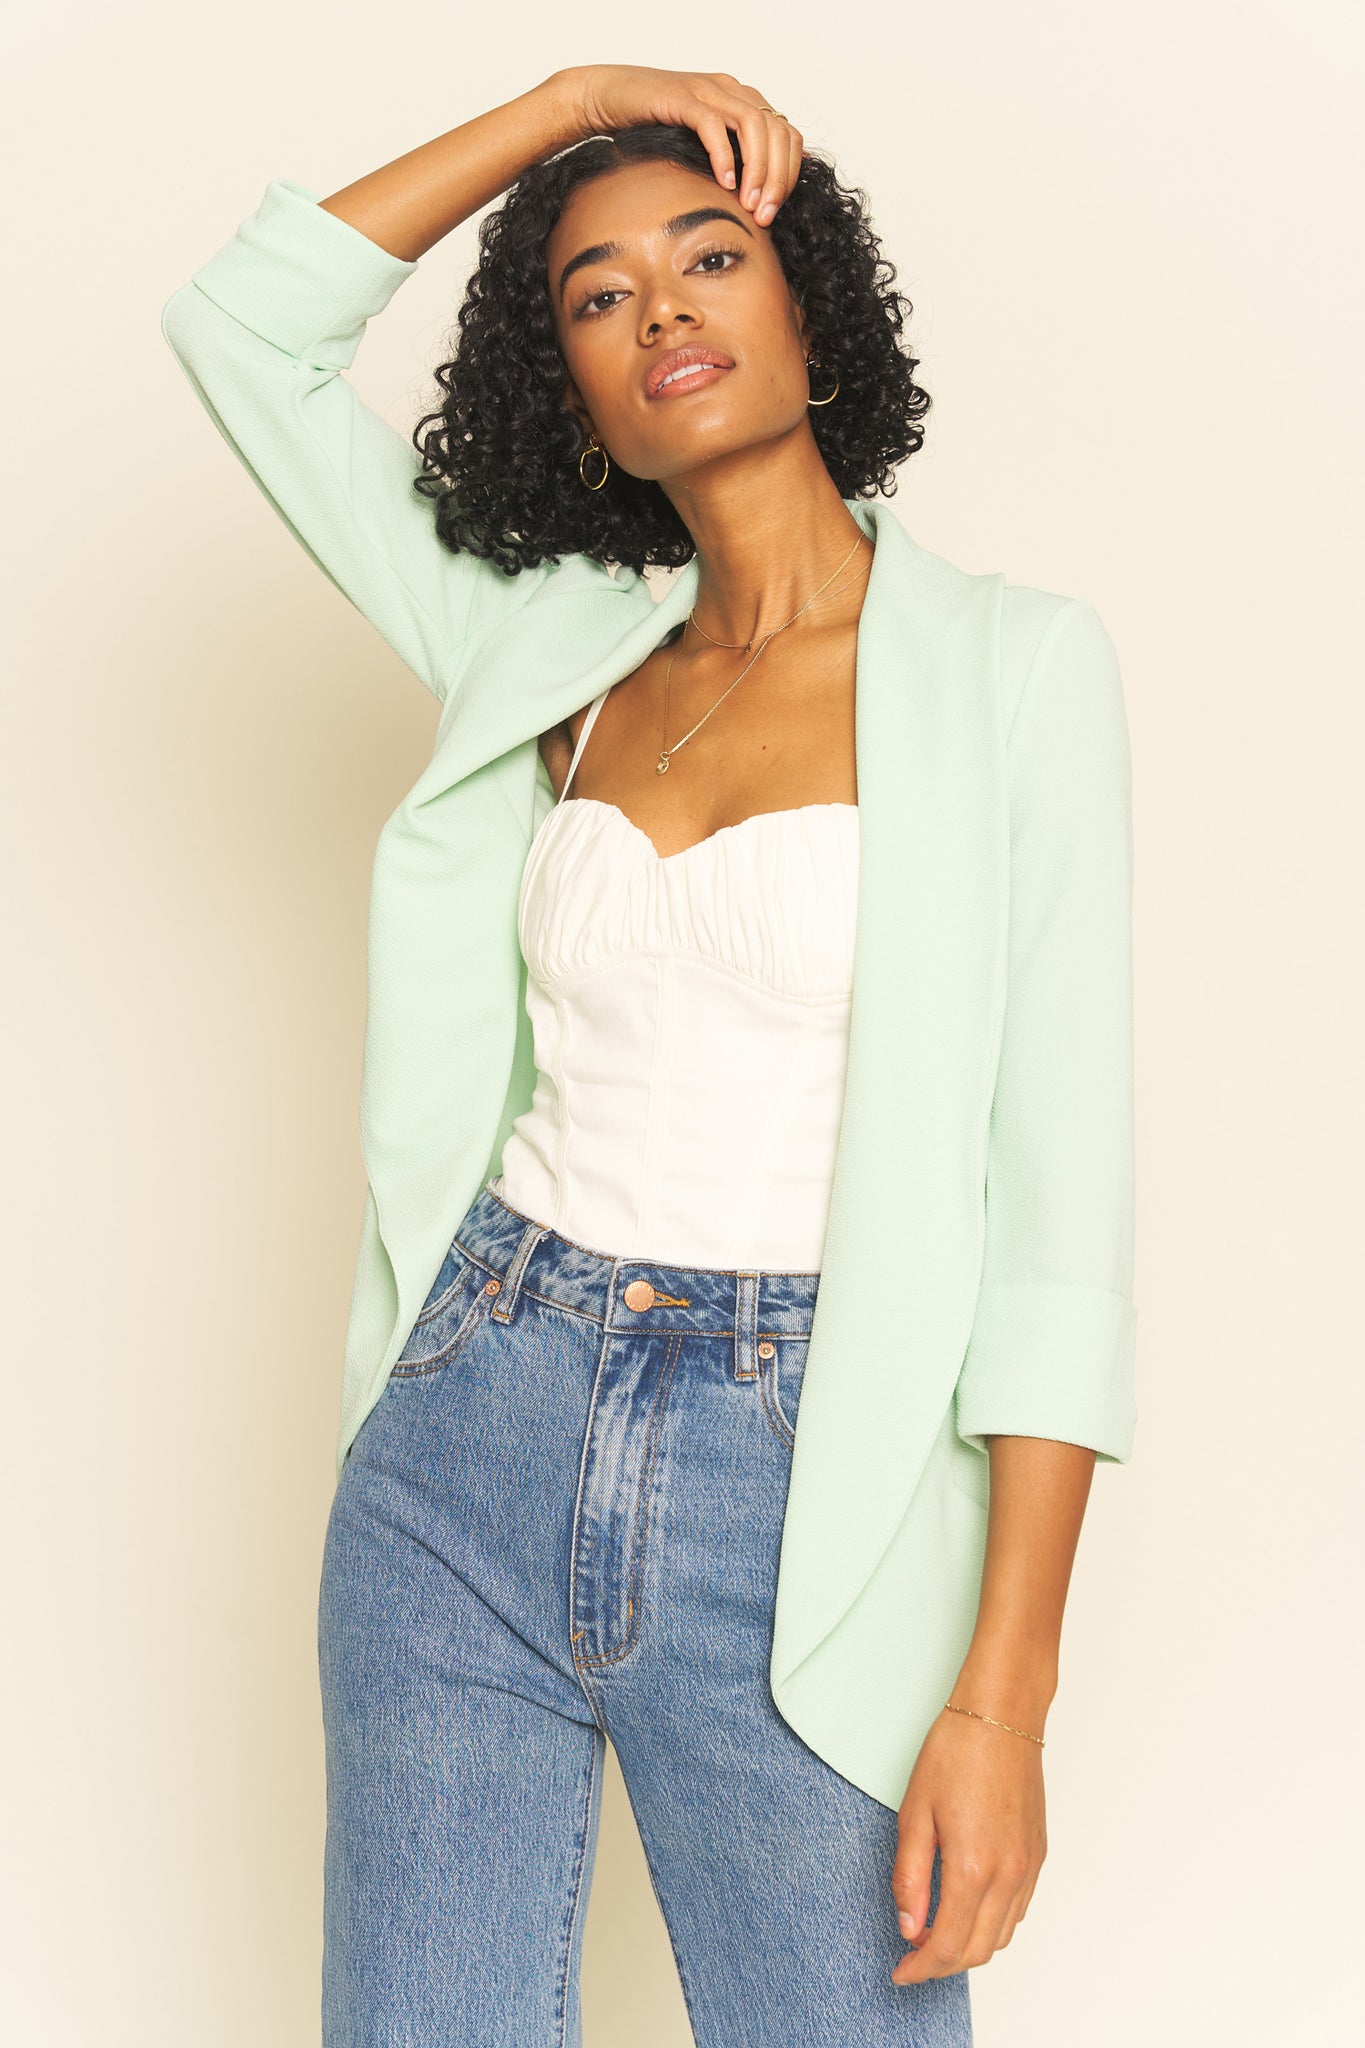 Classic Melanie Shawl Simple Staple Jade Green Color Workwear Blazer Jacket Everyday Shawl Front Pockets Best Seller Customer Favorite